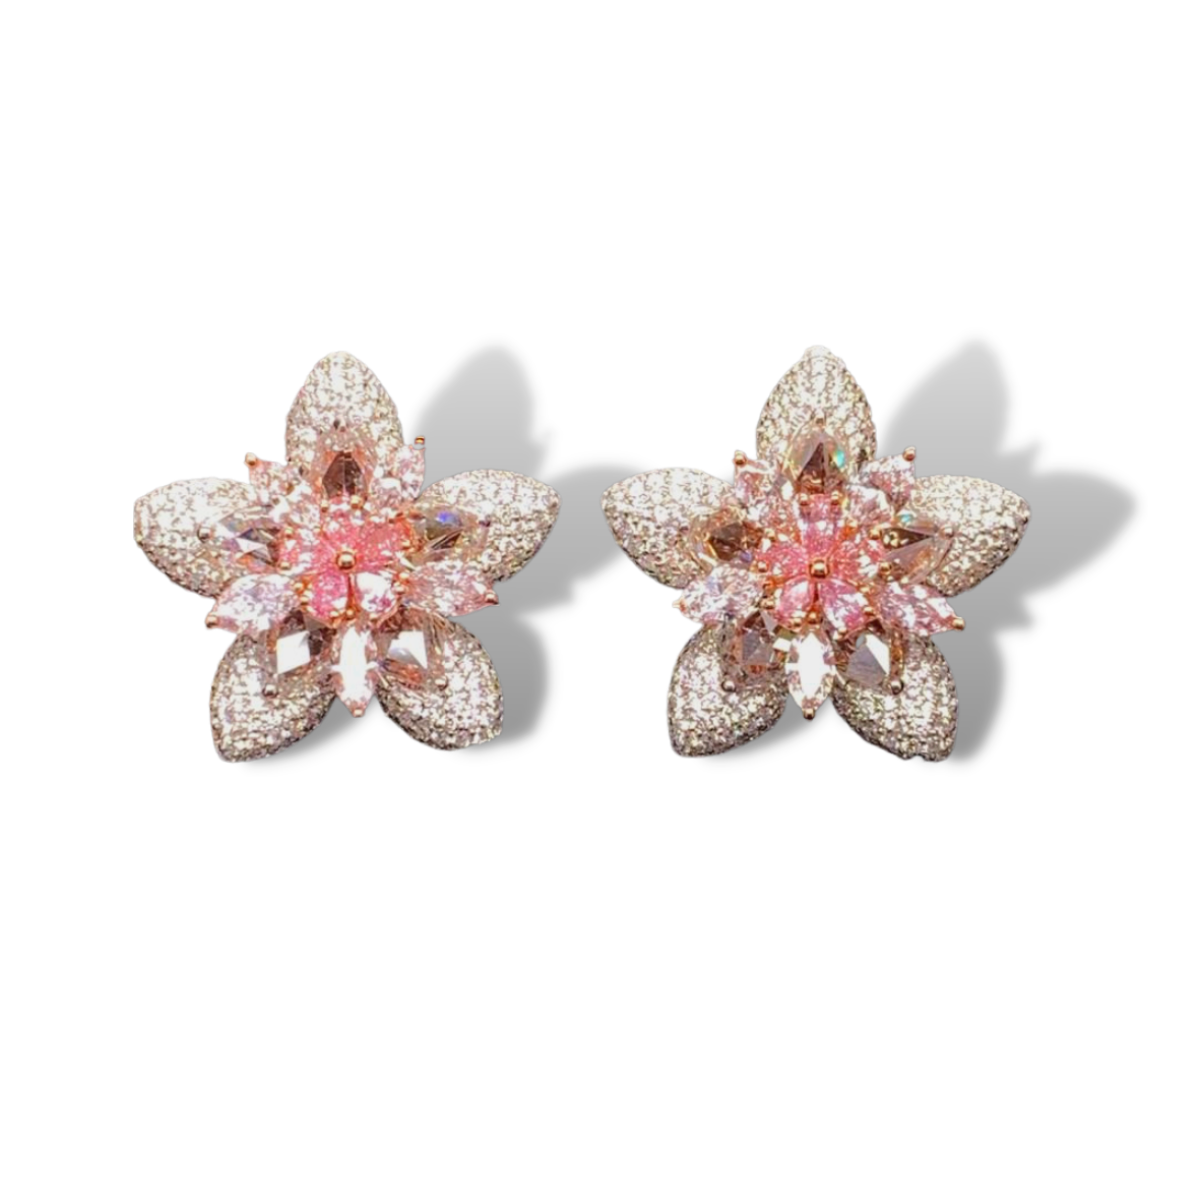 Pink Diamond Stud Earrings  Marquise Cut  Sidestone Earrings in 18K White Gold Front View